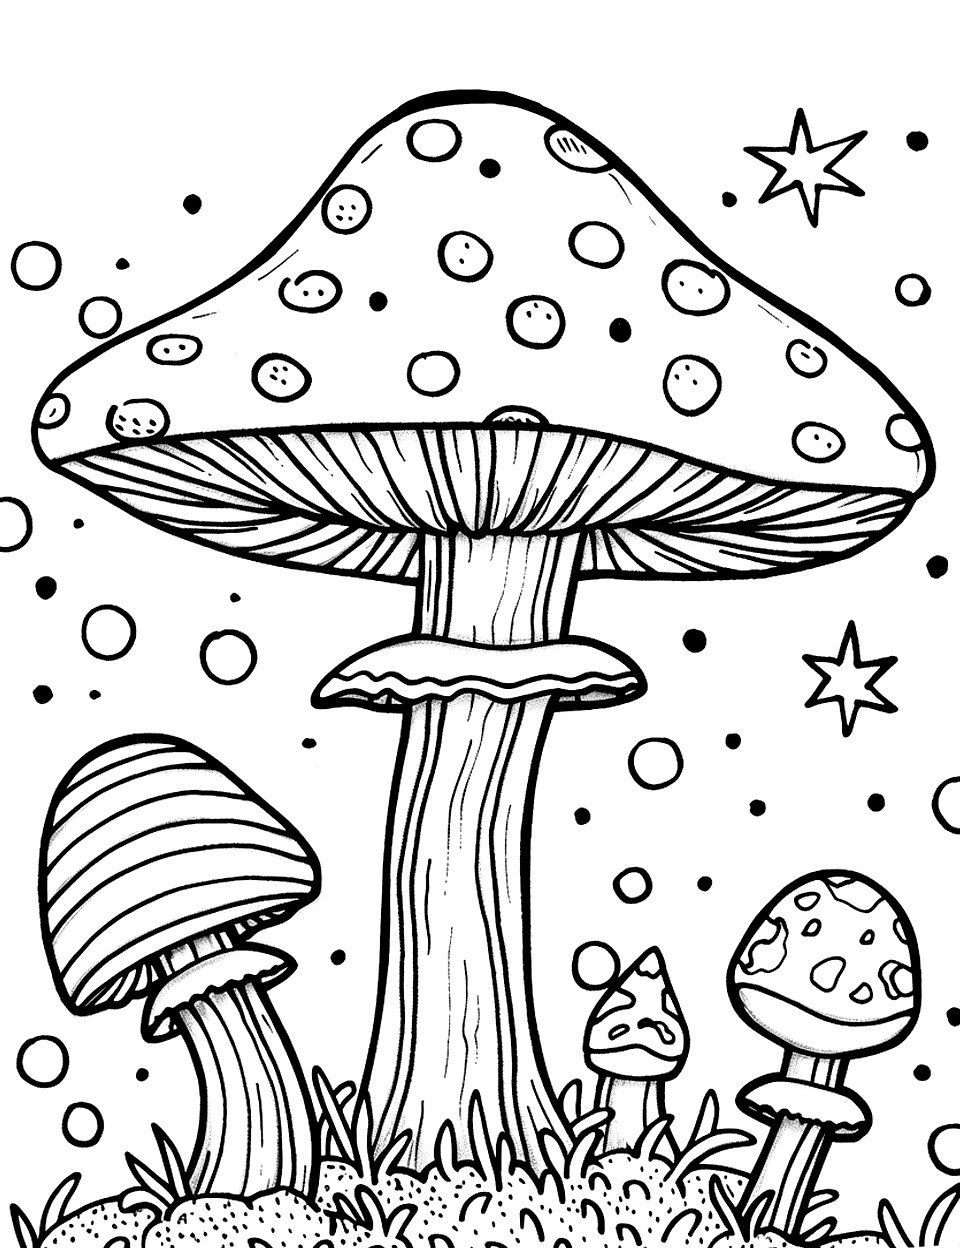 Starry Night and Mushrooms Mushroom Coloring Page - Mushrooms under a sky full of stars, providing a fantasy night scene.